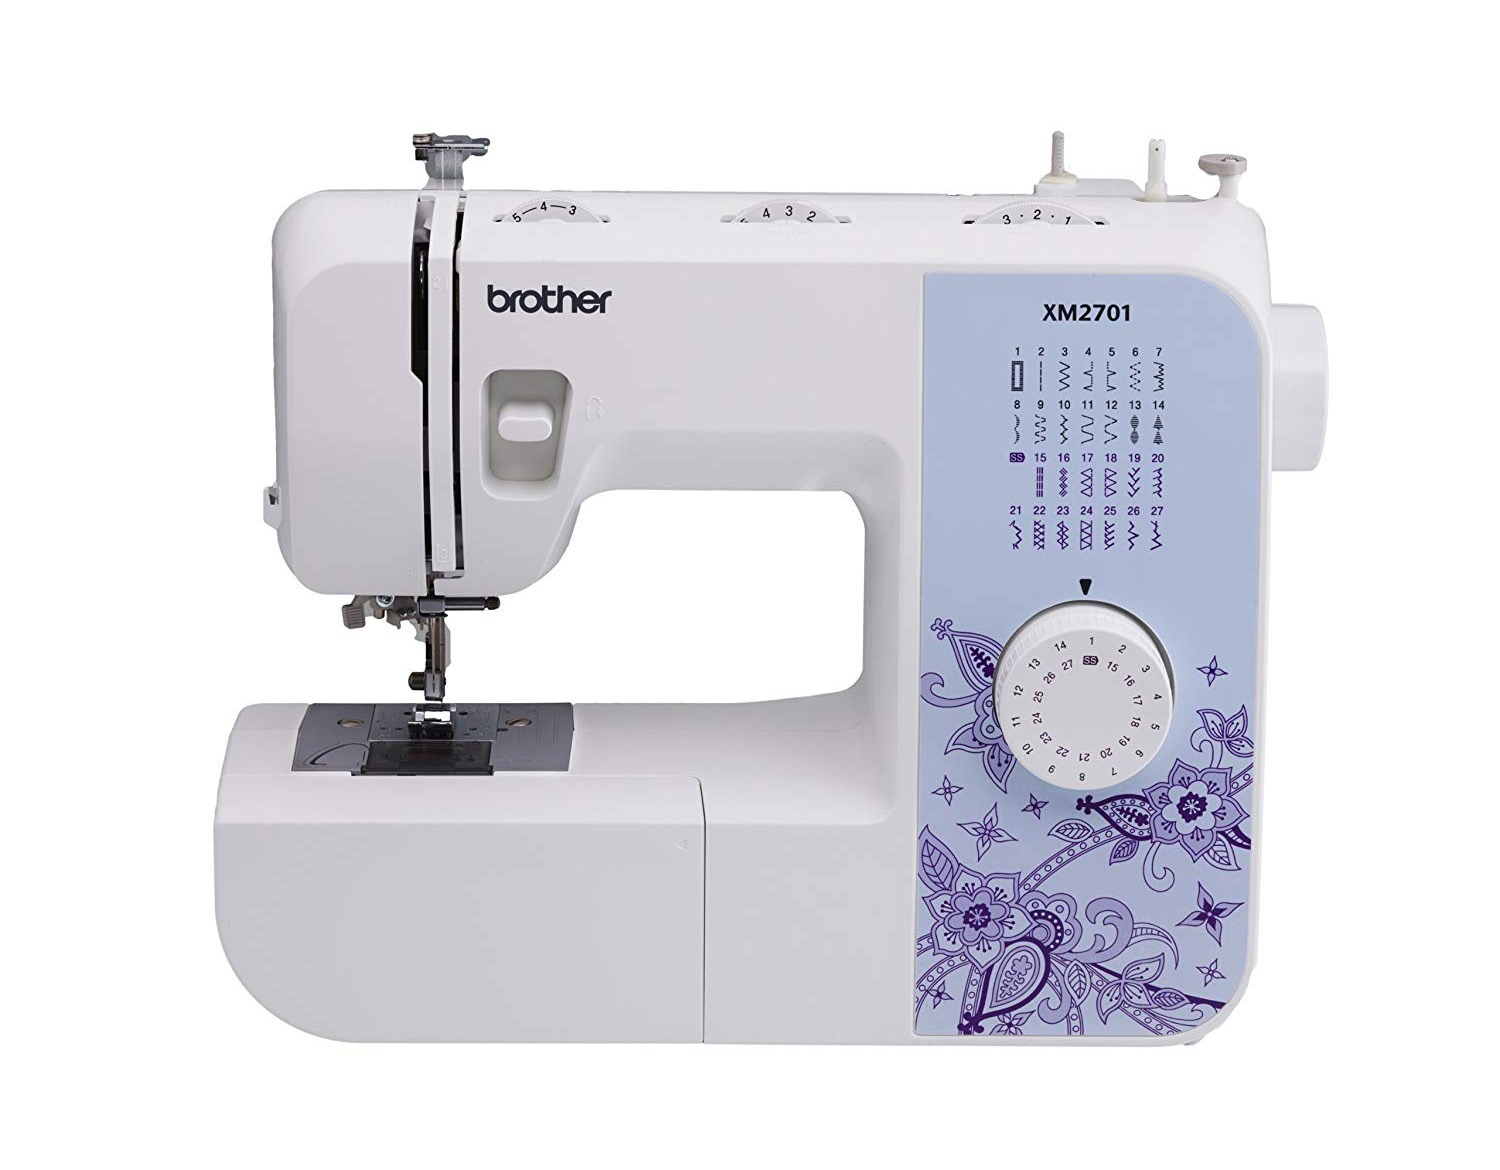 Brother XM2701 lightweight sewing machine